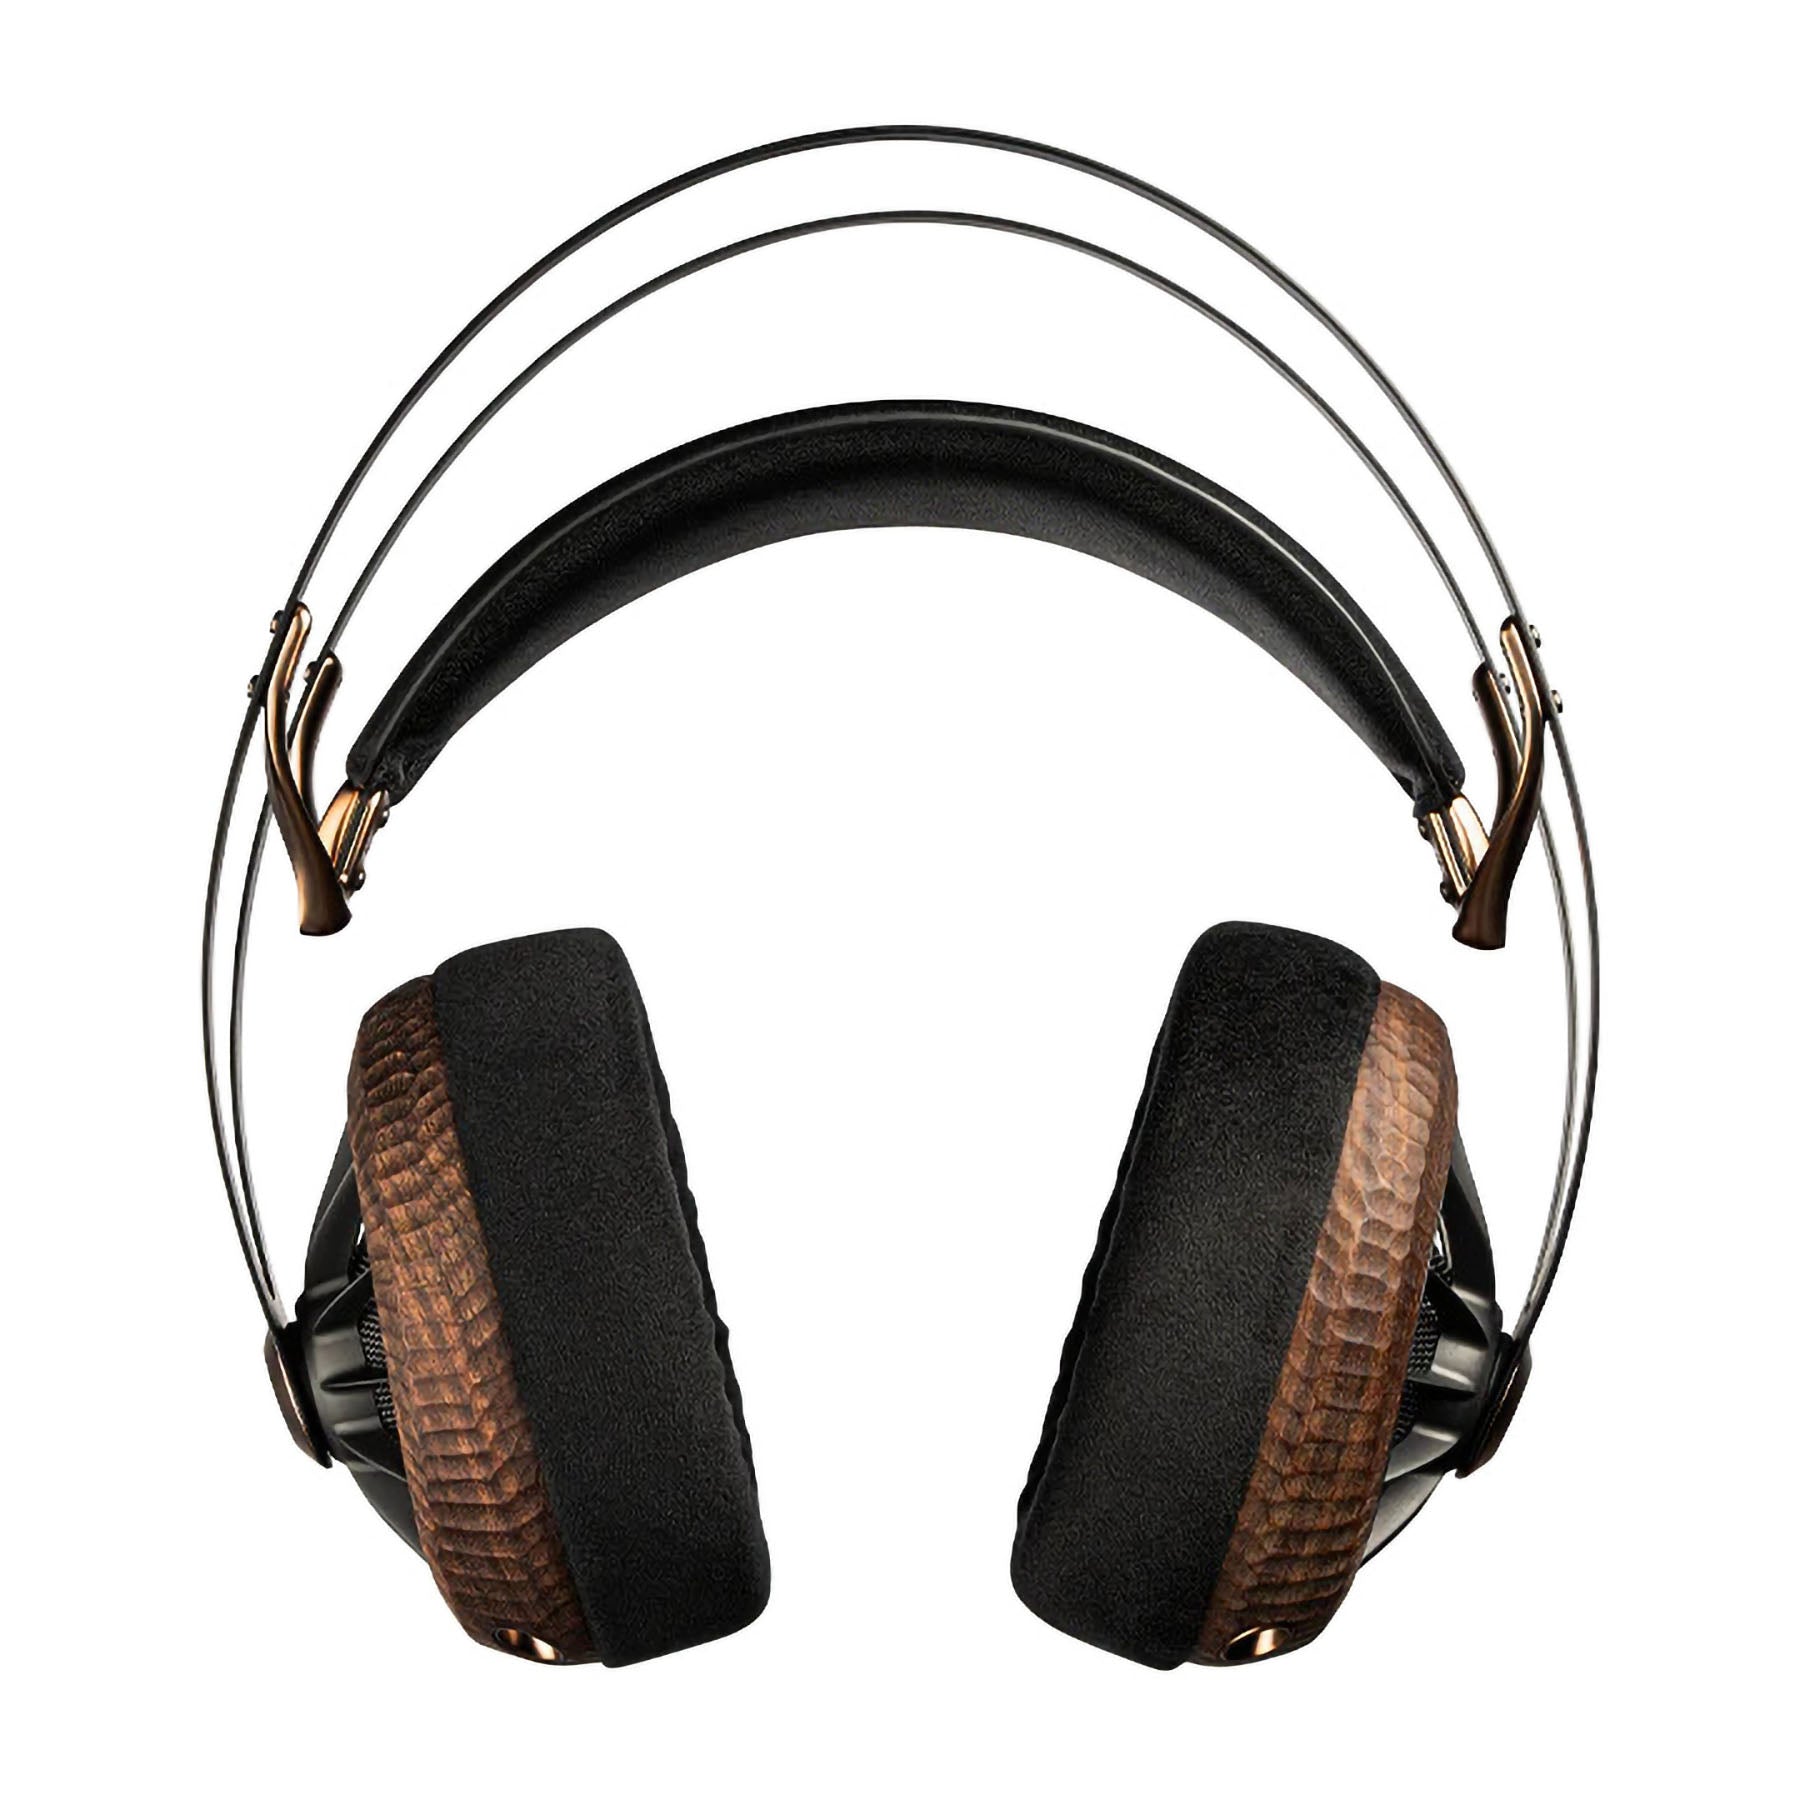 Meze Audio 109 PRO Primal Edition Open-Back Headphone